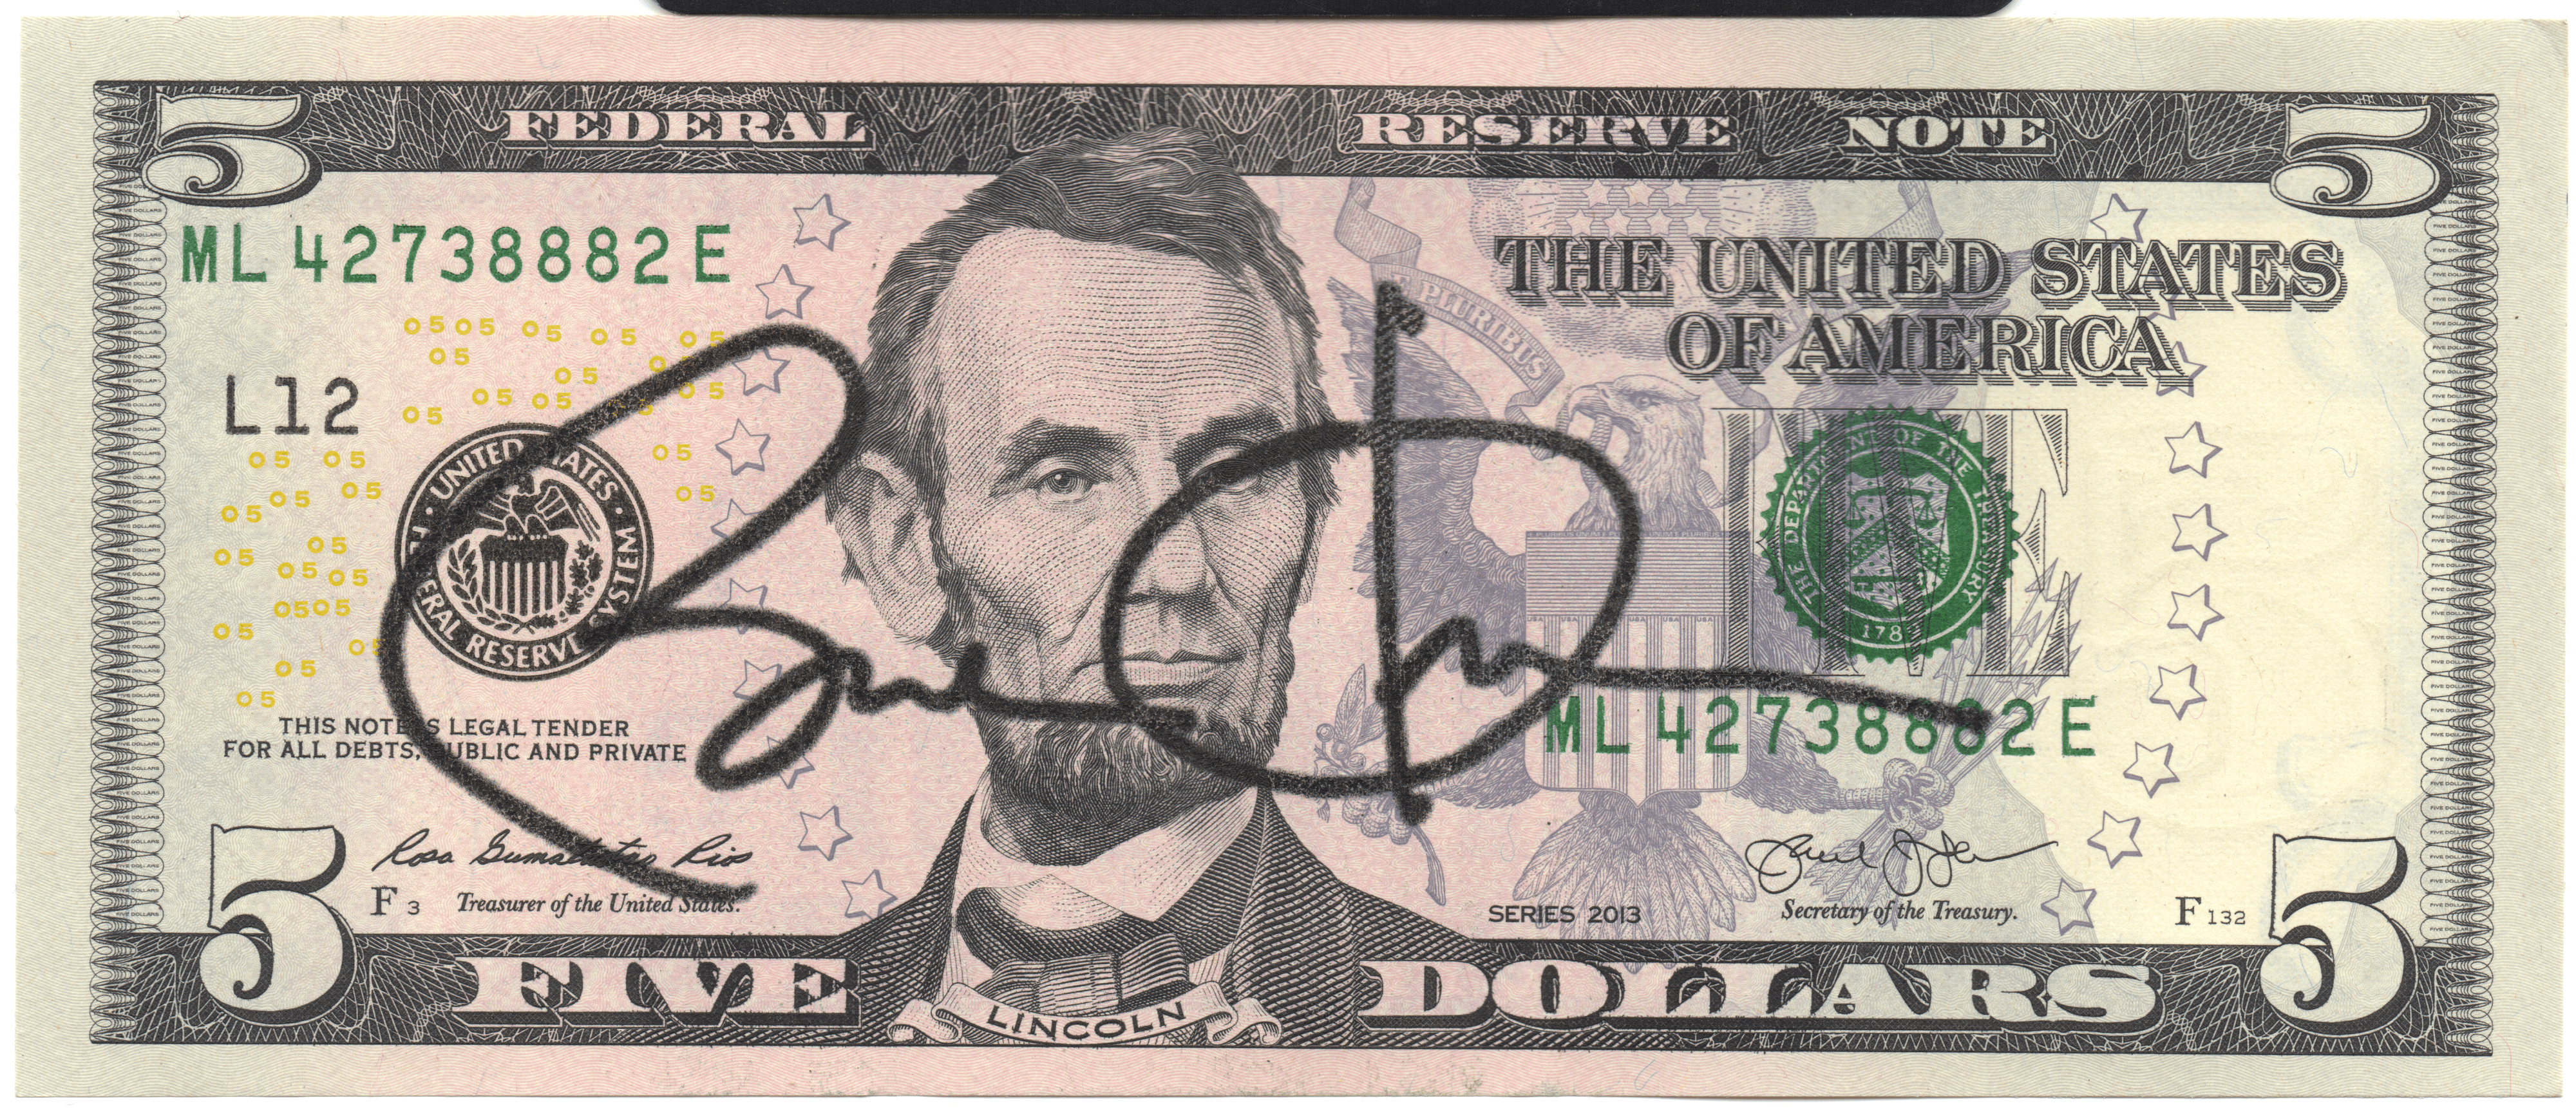 5 US$ Bill with Barack Obama signature #24/25